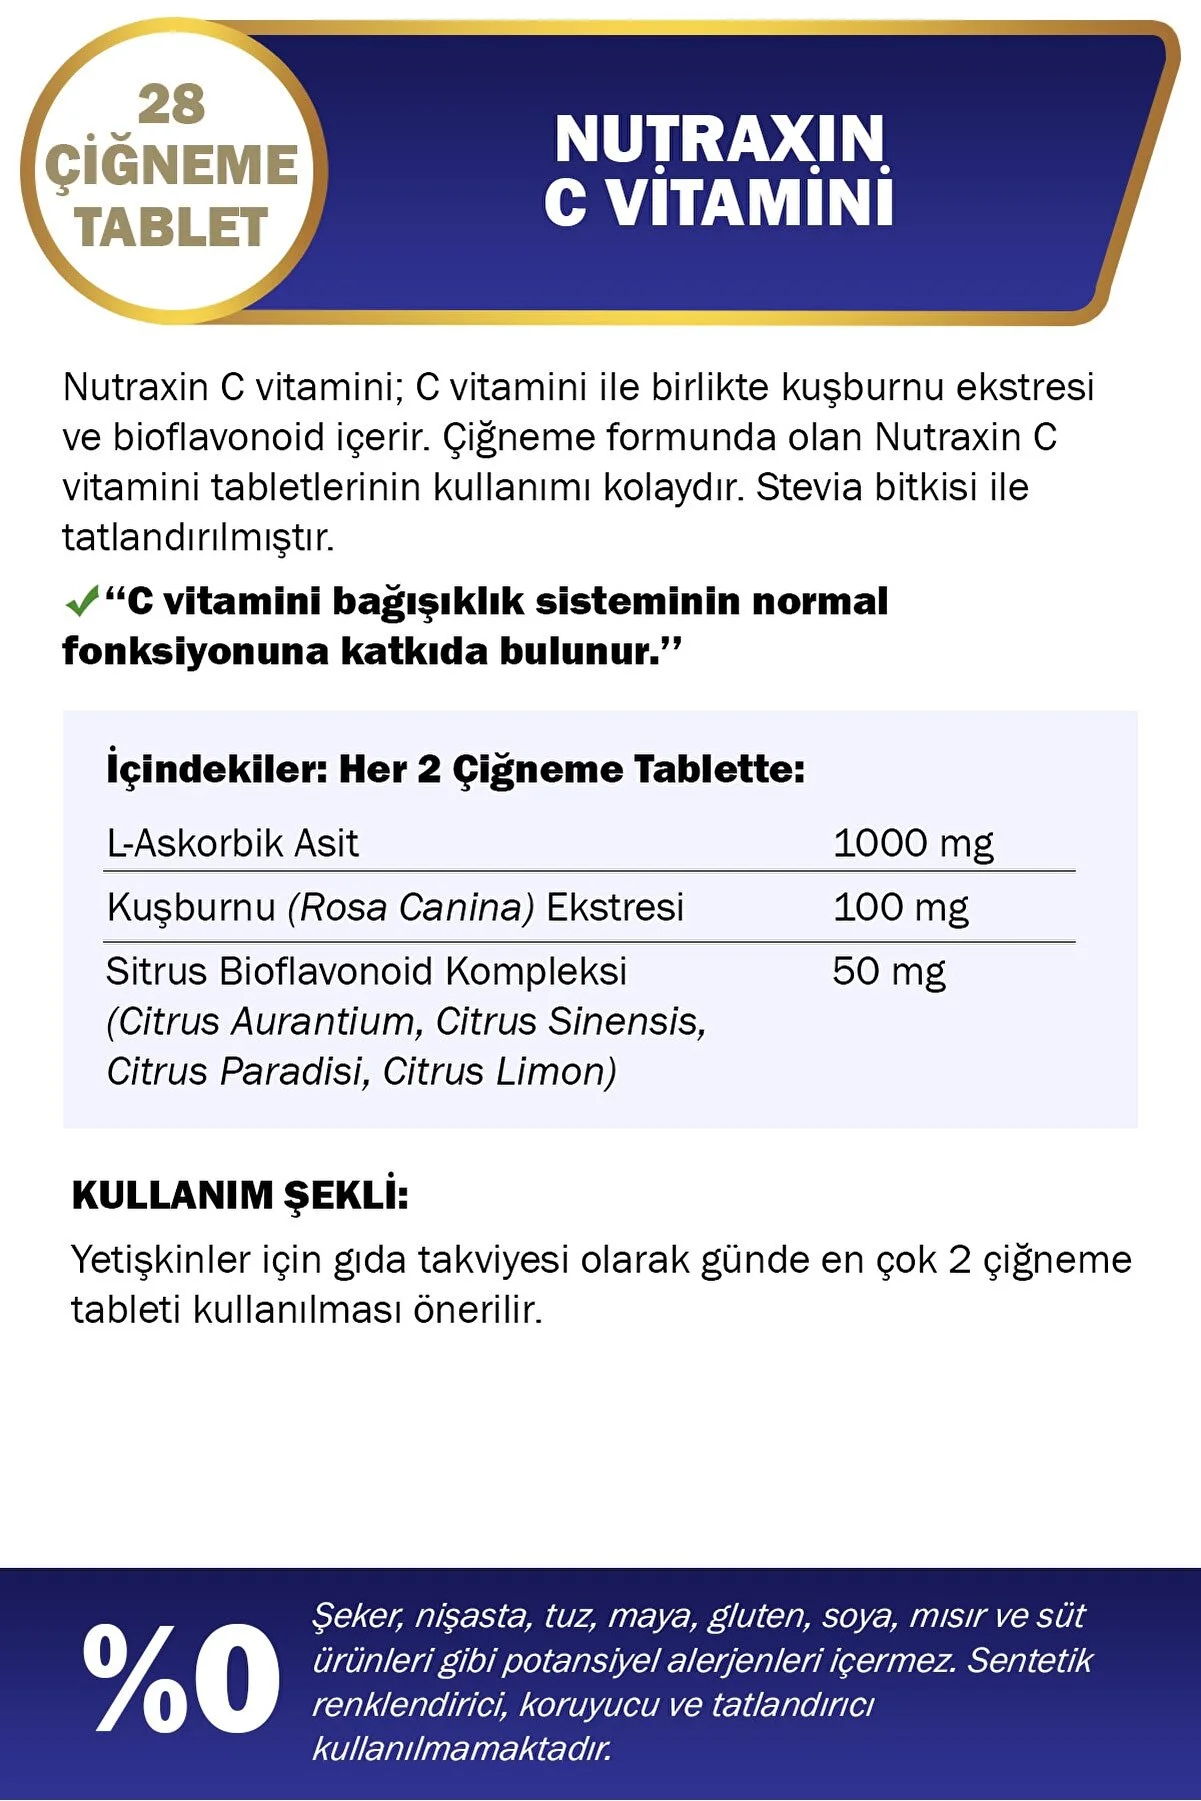 Nutraxin C Vitamini Çiğneme 28 Tablet - 2